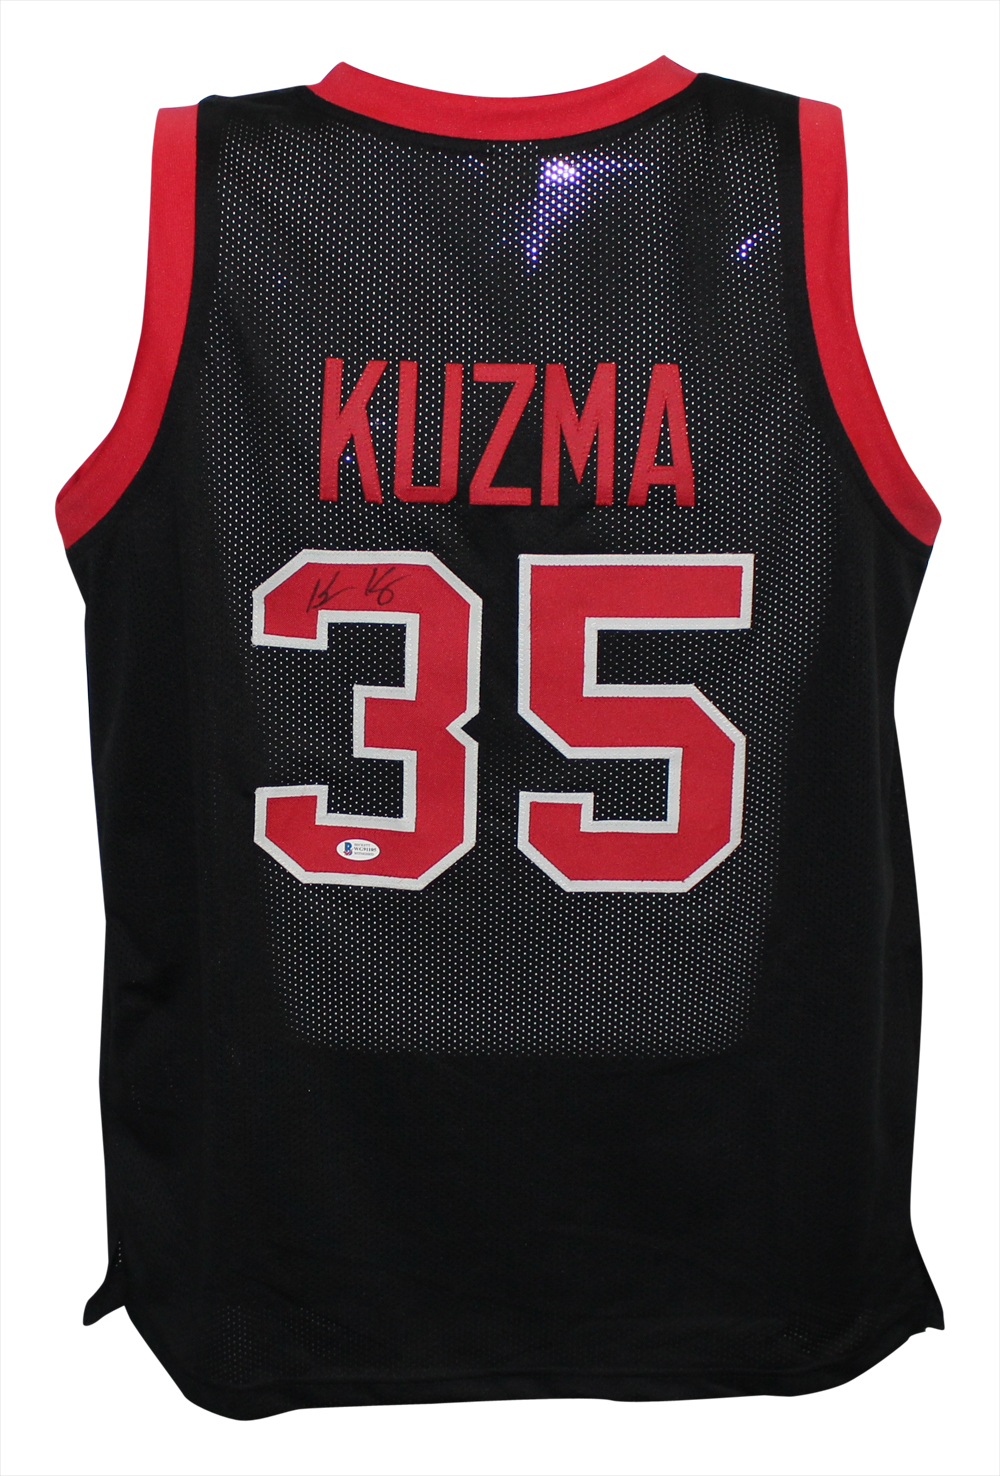 Kyle Kuzma Autographed/Signed College Style Black XL Jersey BAS 31098